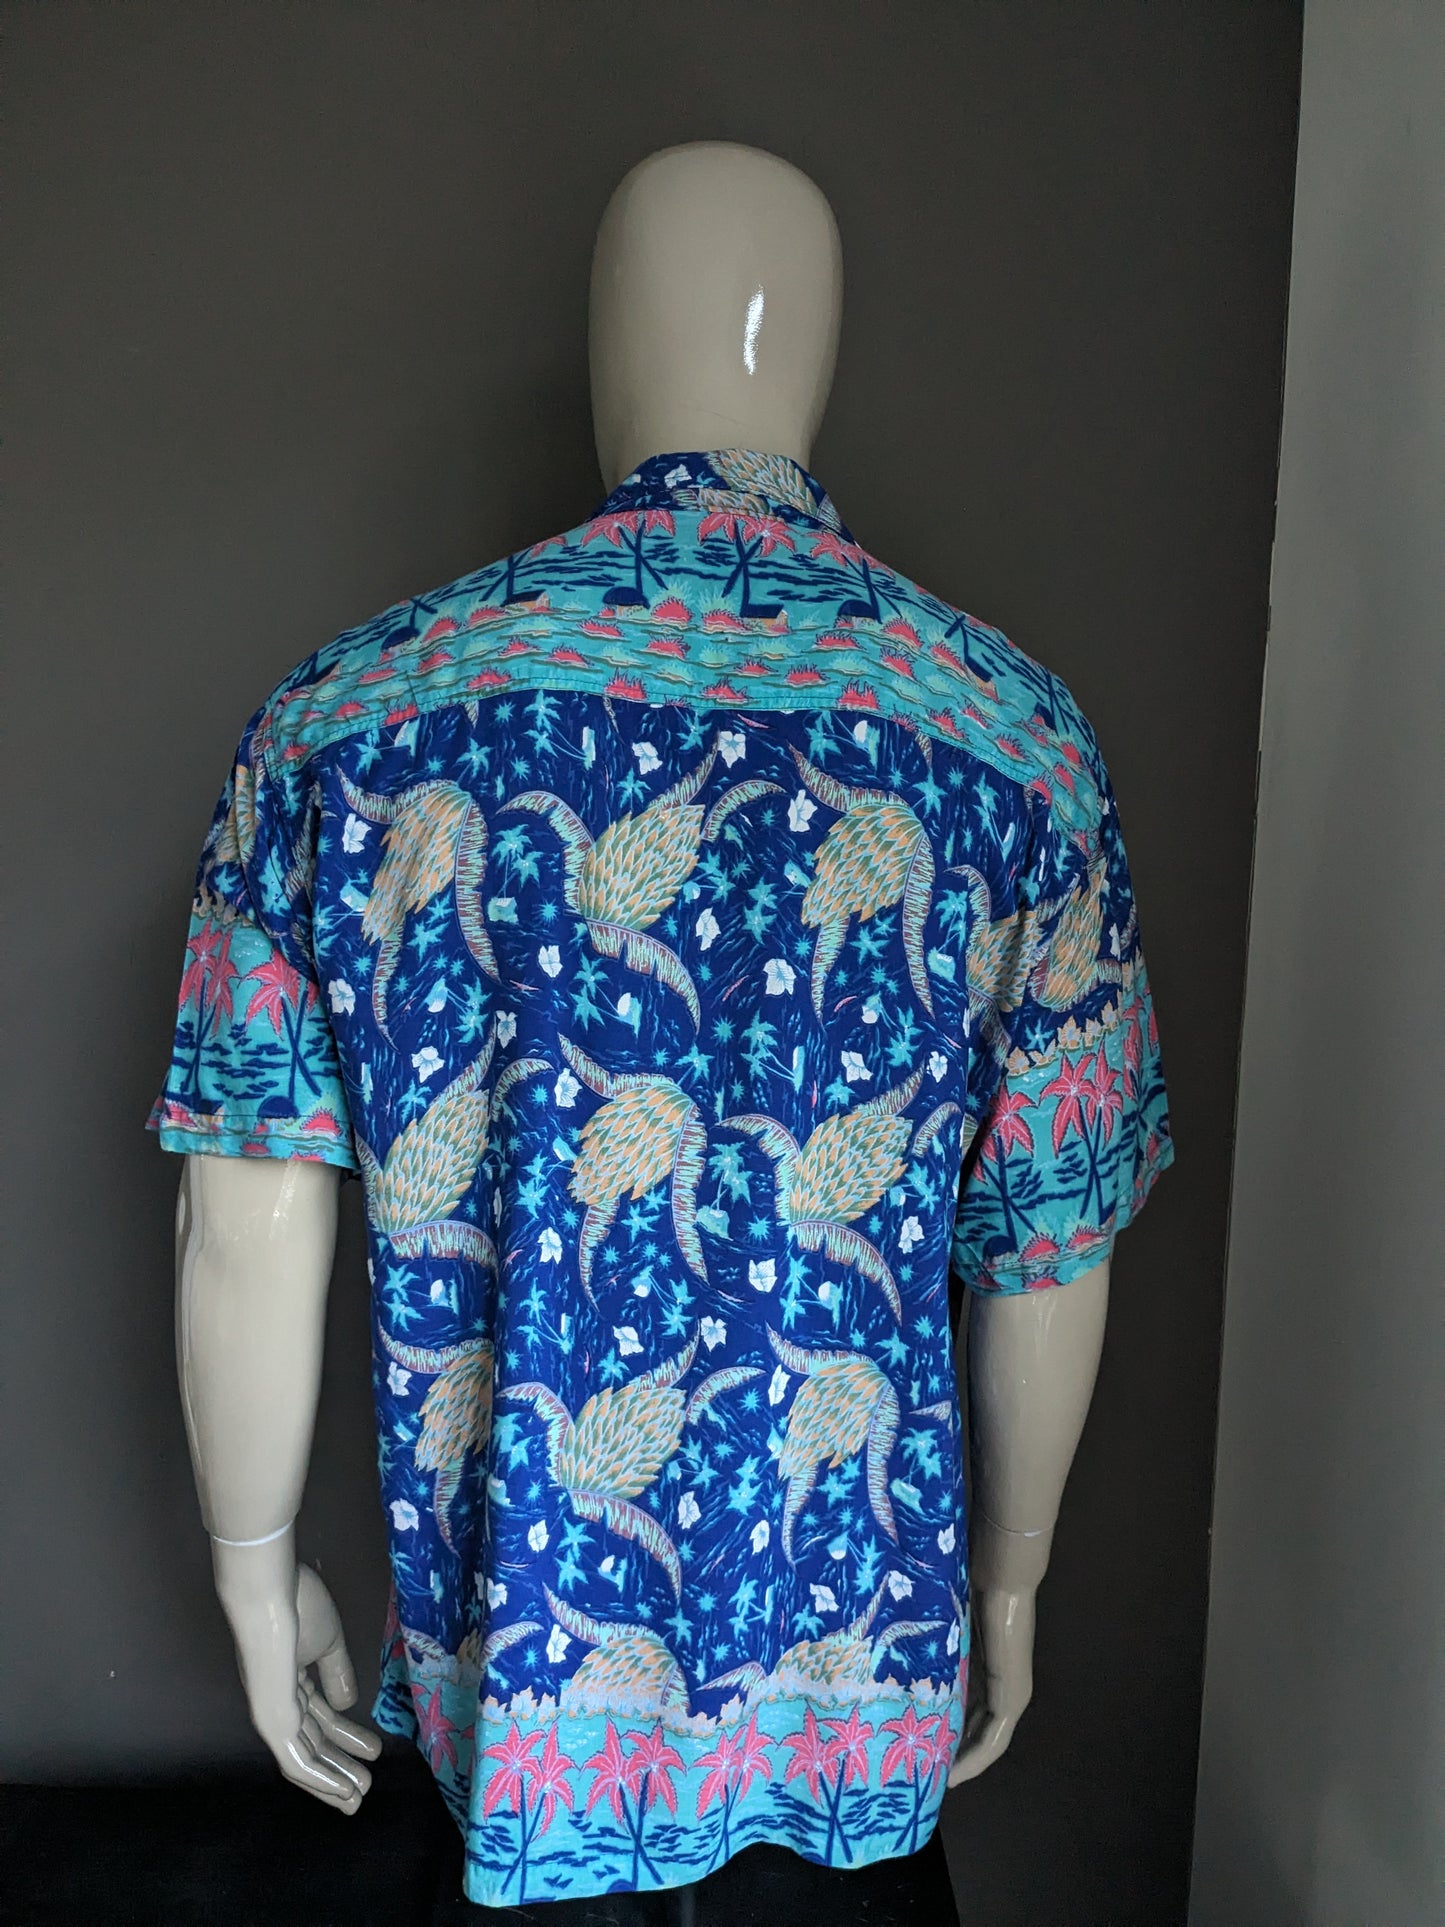 Rainbow Jo maui original Hawaii shirt short sleeve. Blue orange pink green print. Size XL.